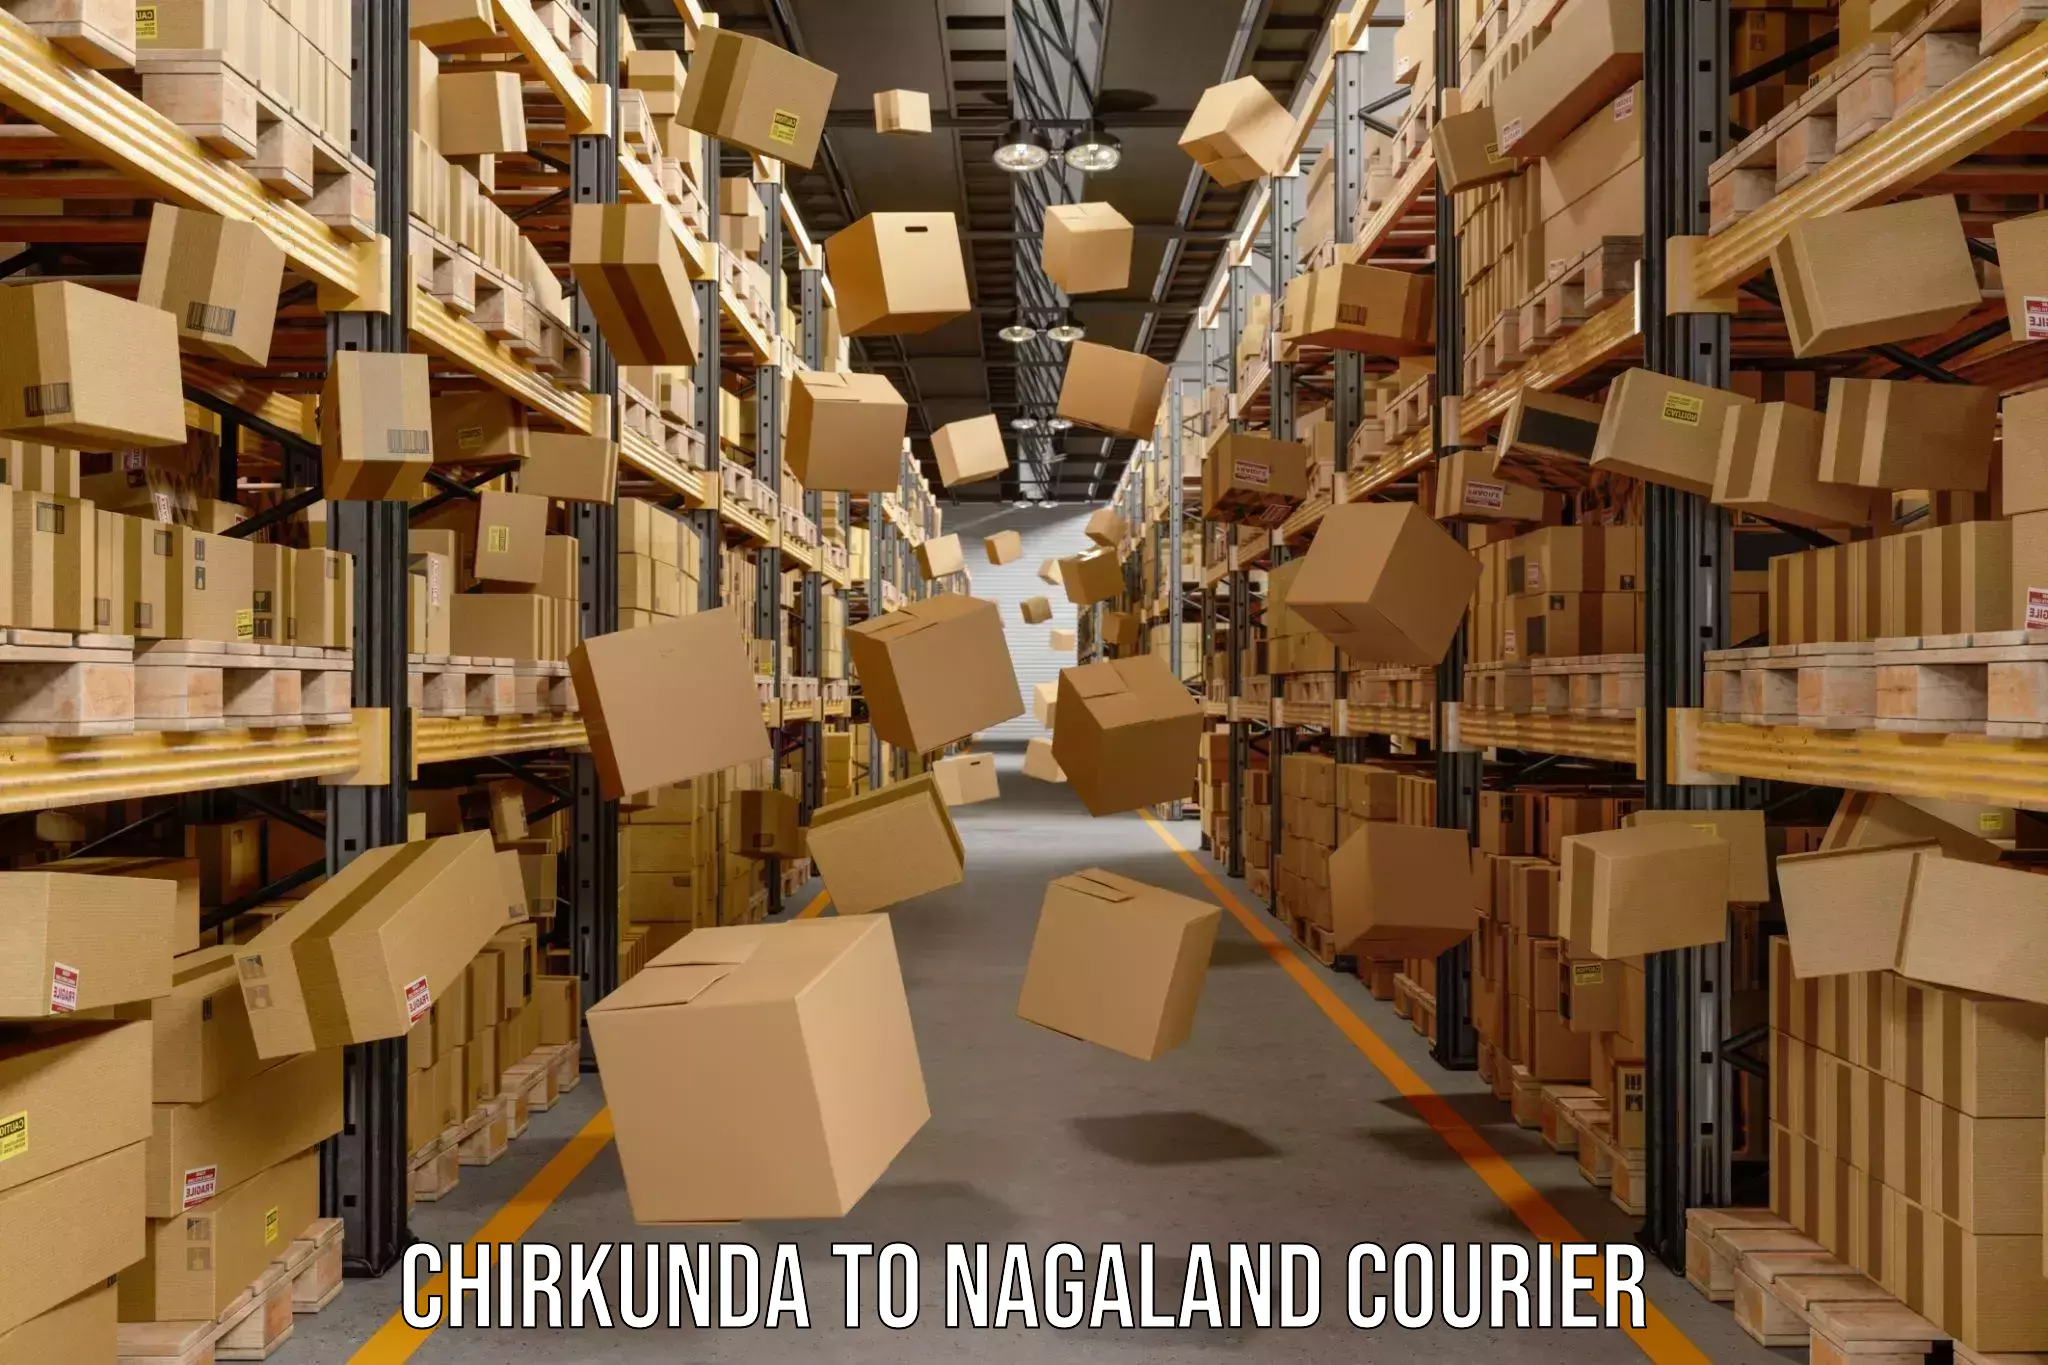 Courier service innovation Chirkunda to Dimapur